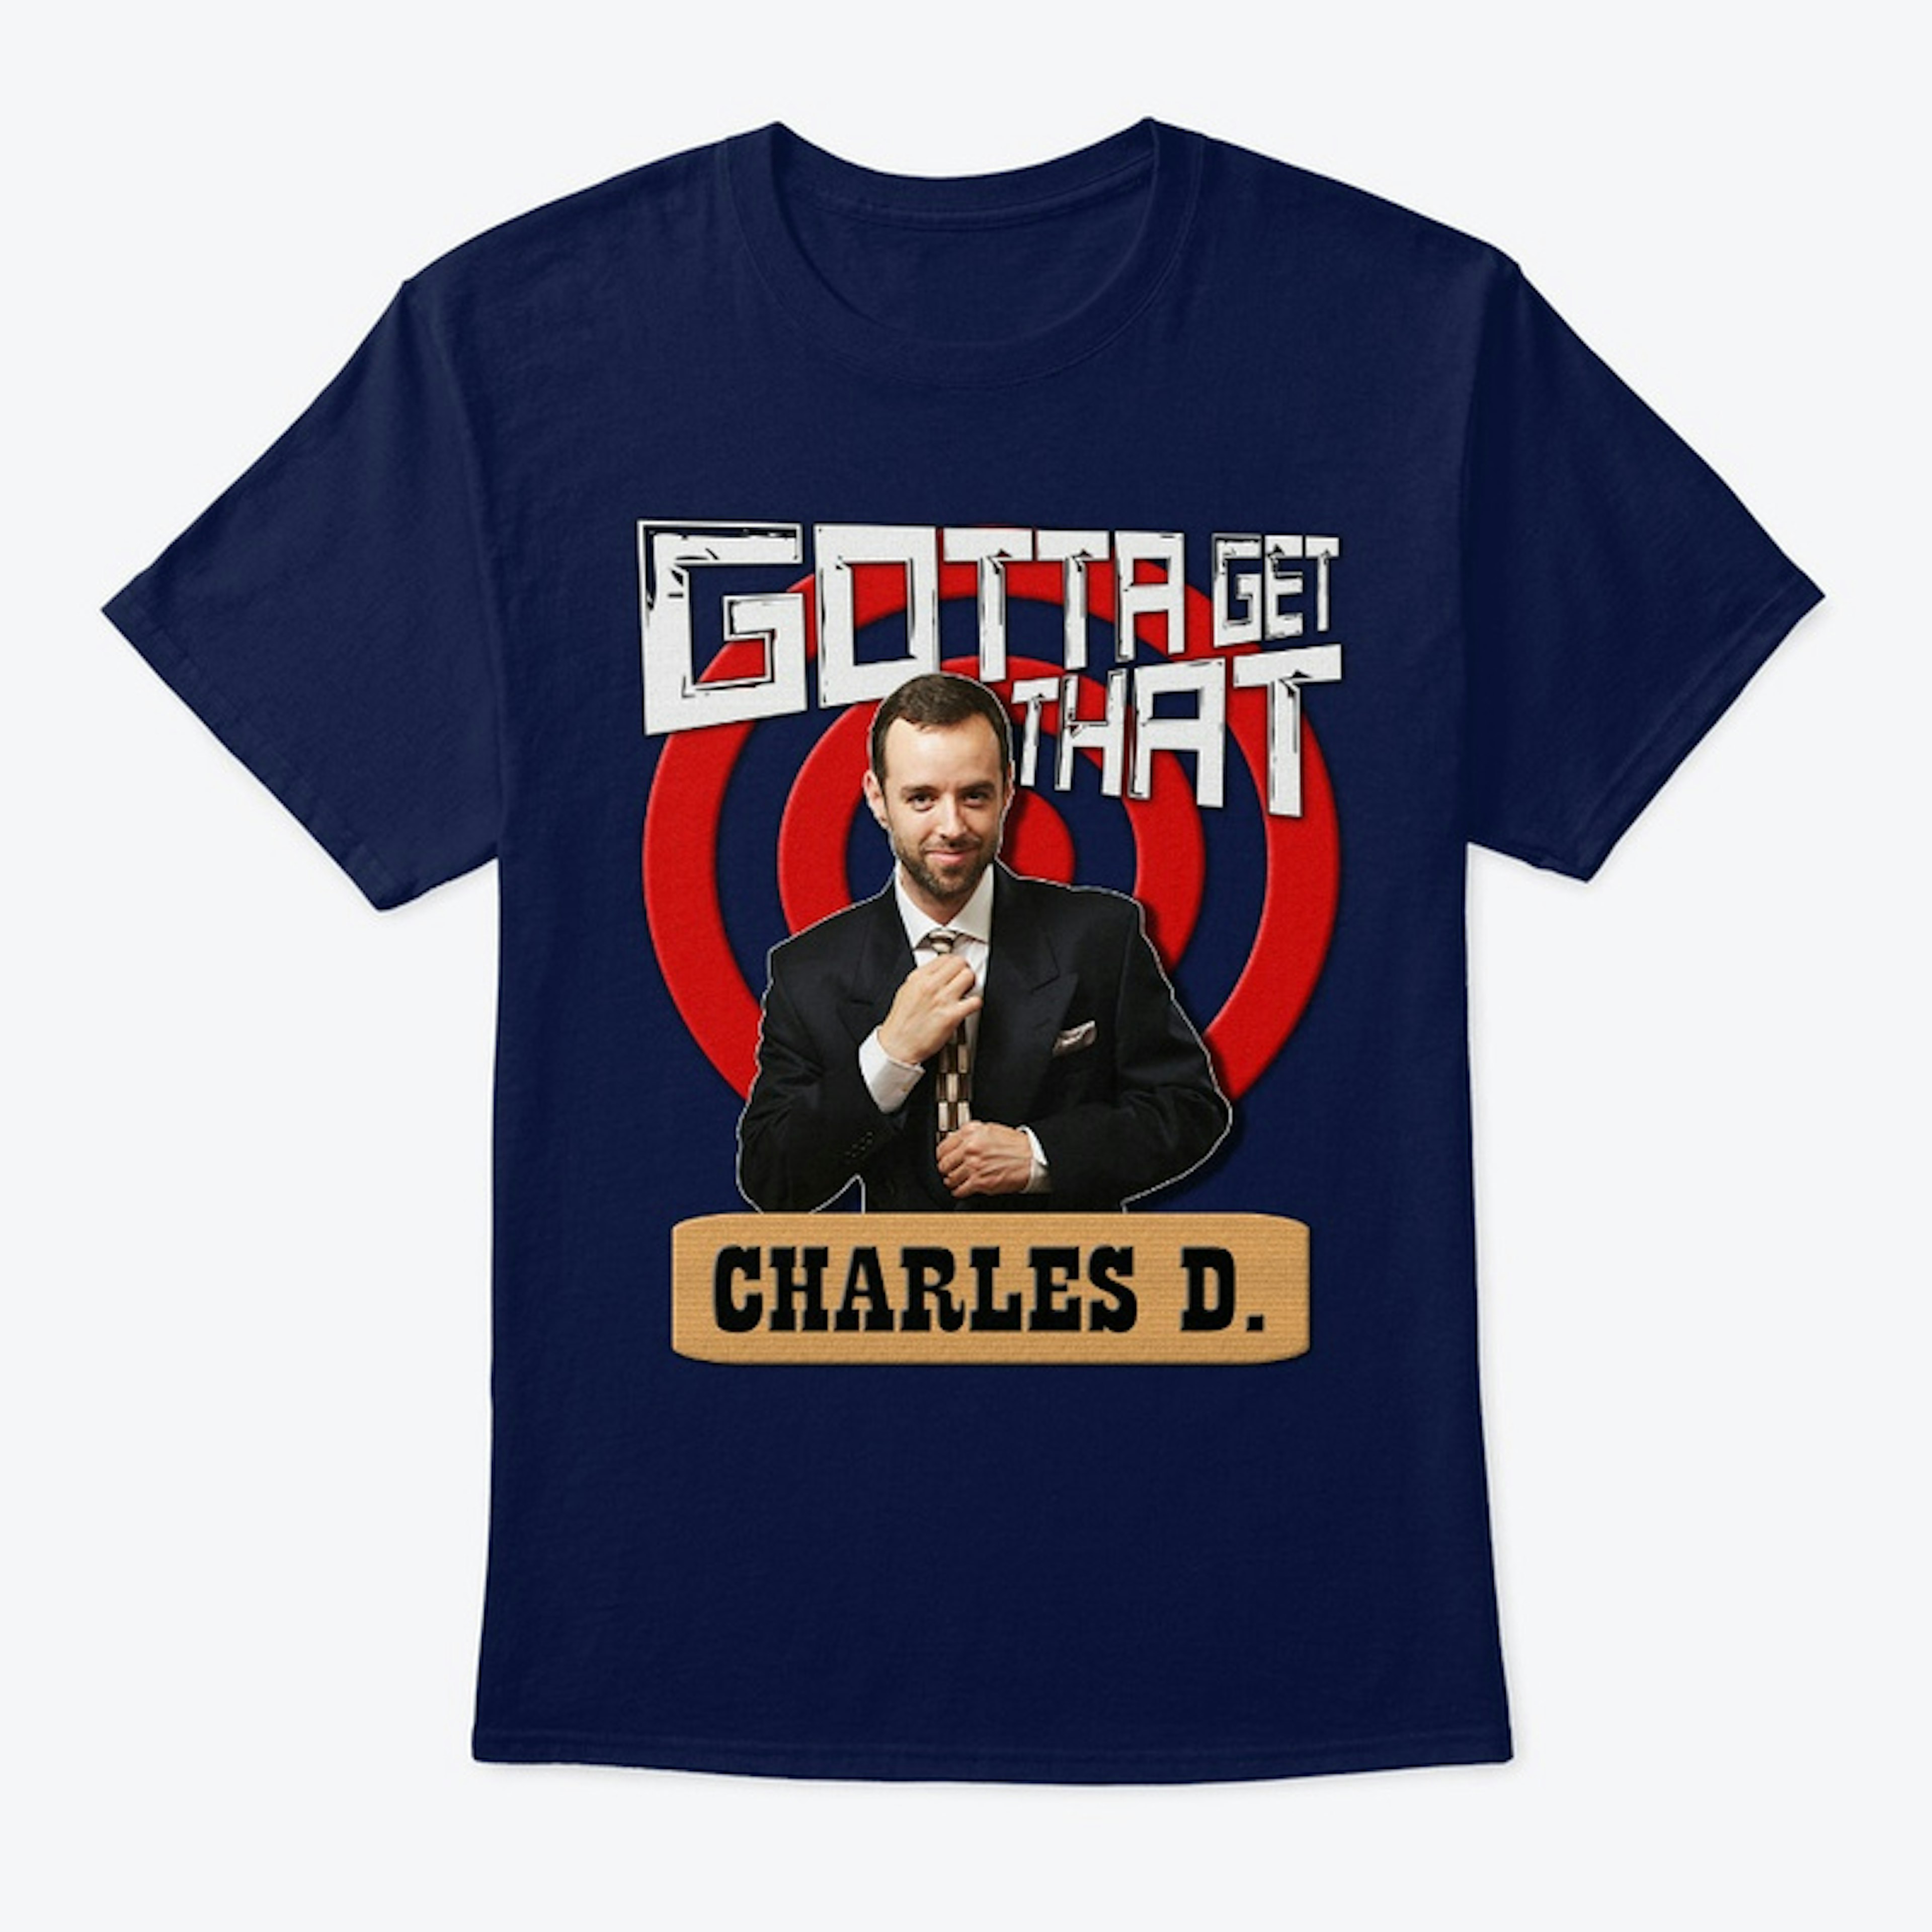 Gotta Get That Charles D.